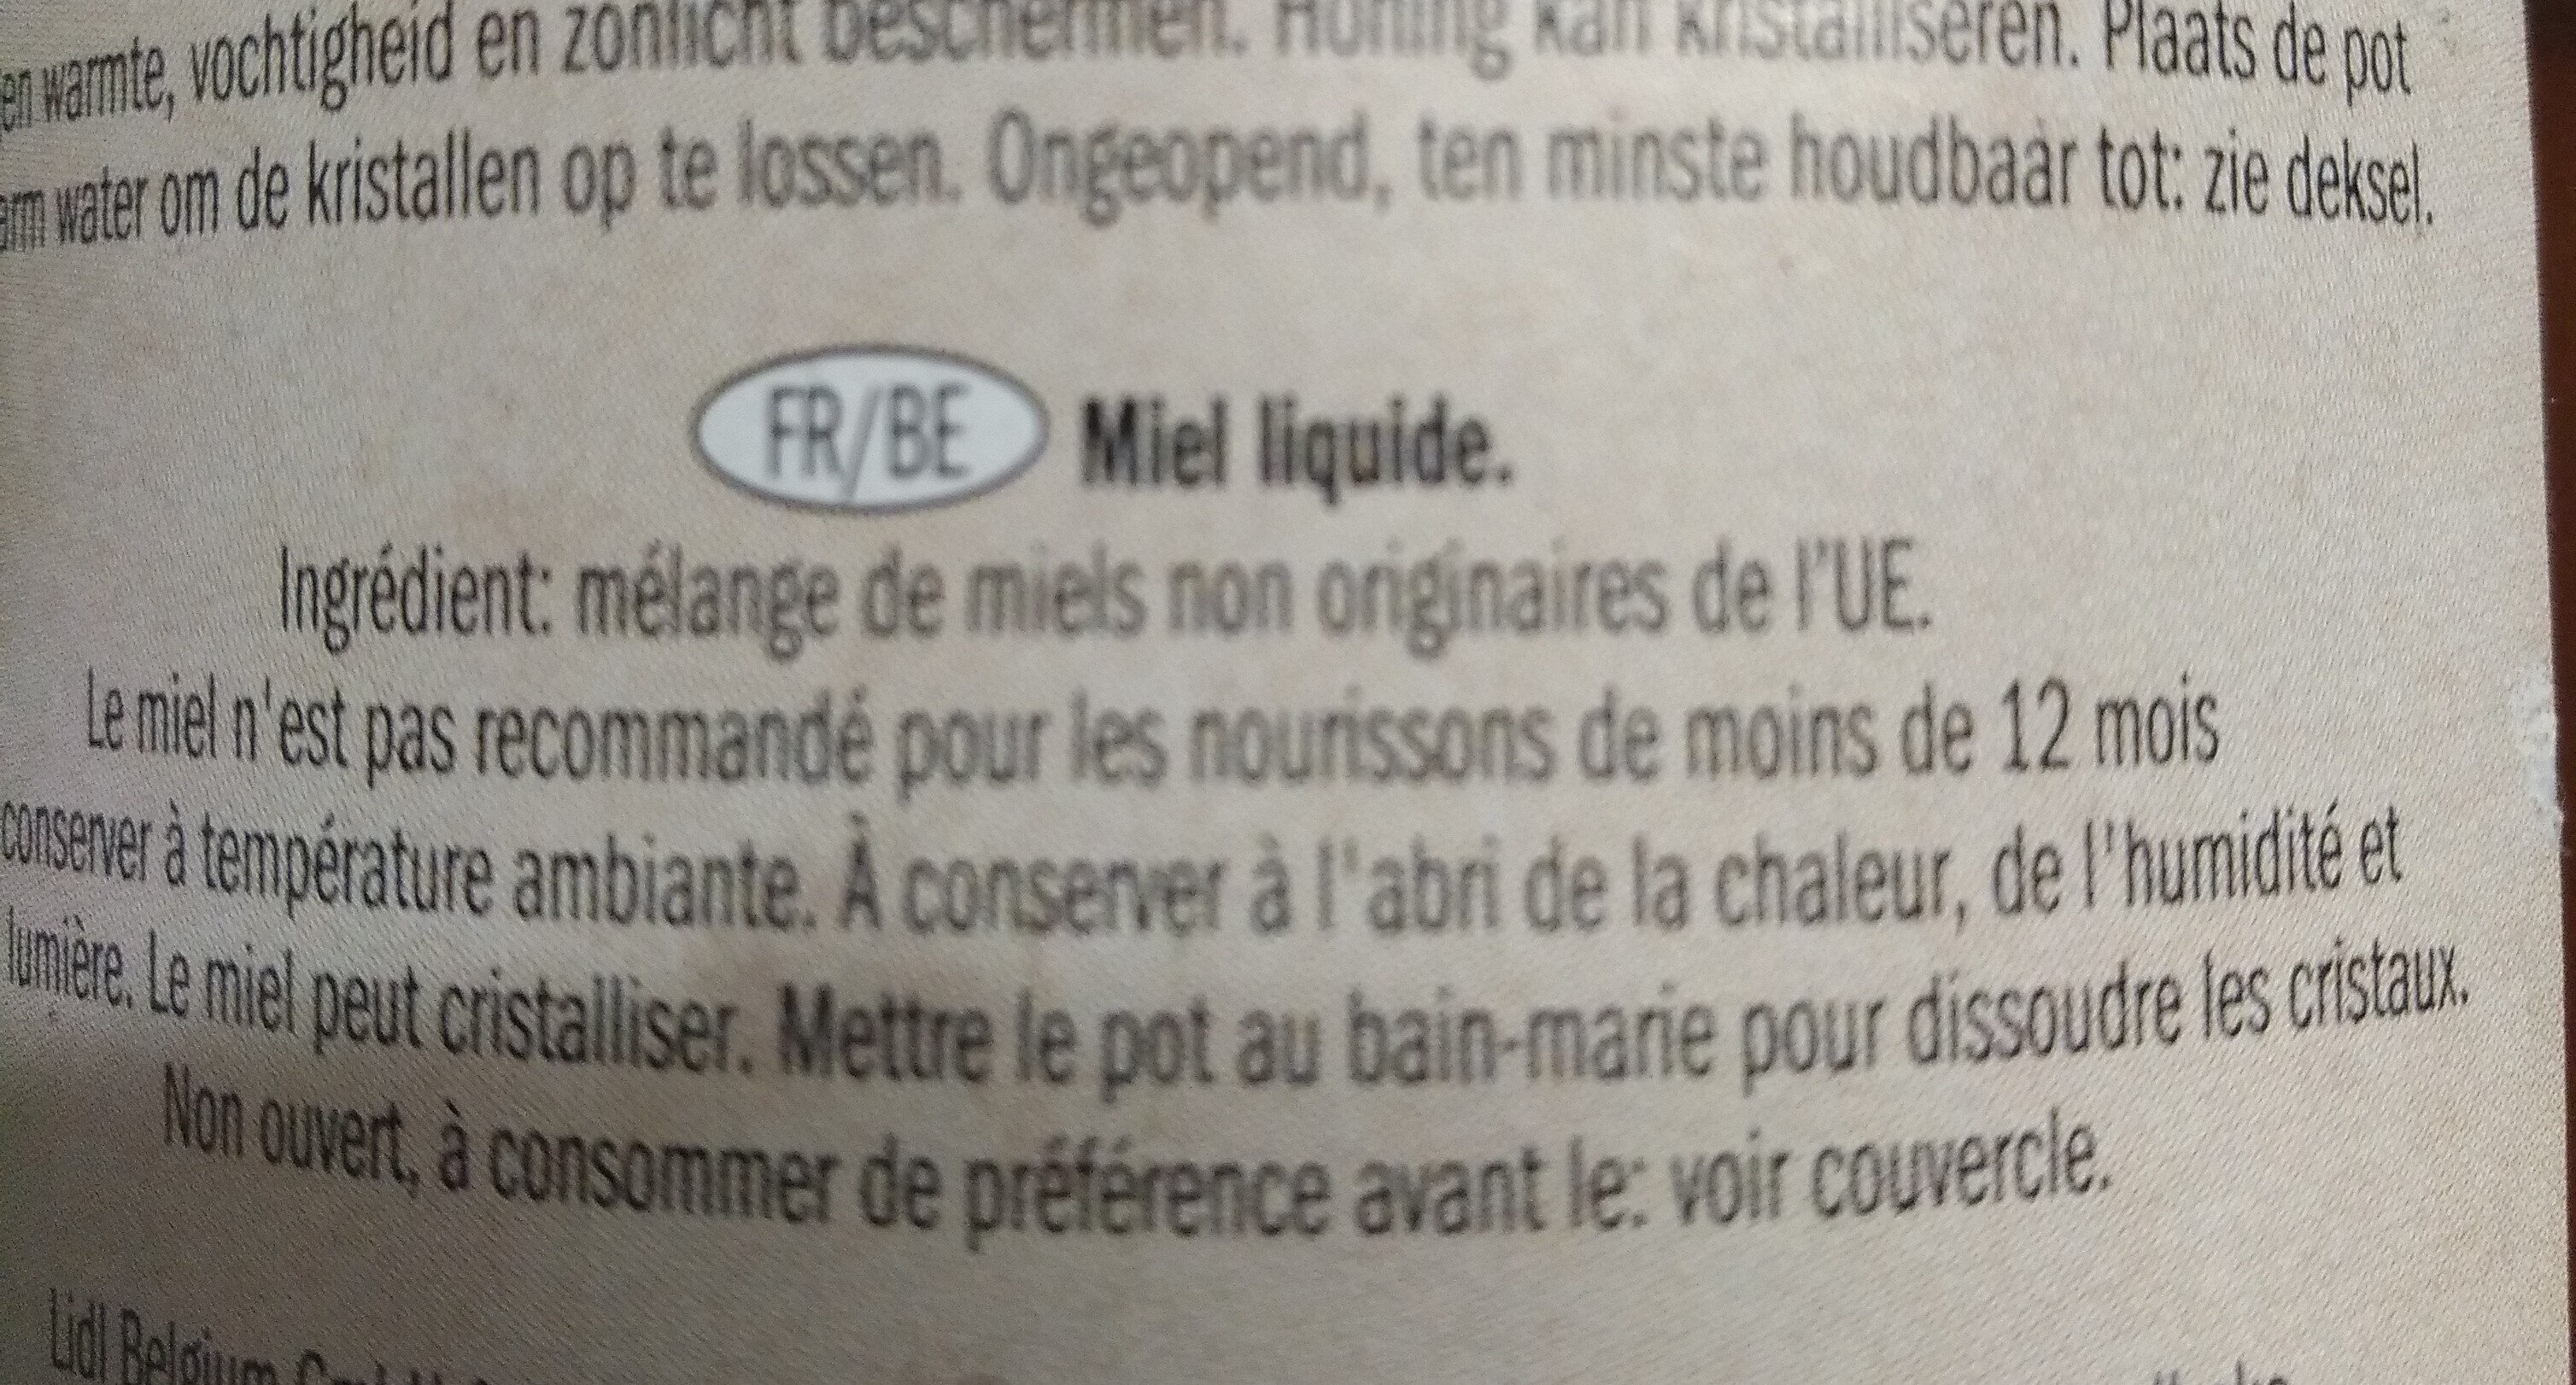 Miel liquide - Ingrediënten - fr